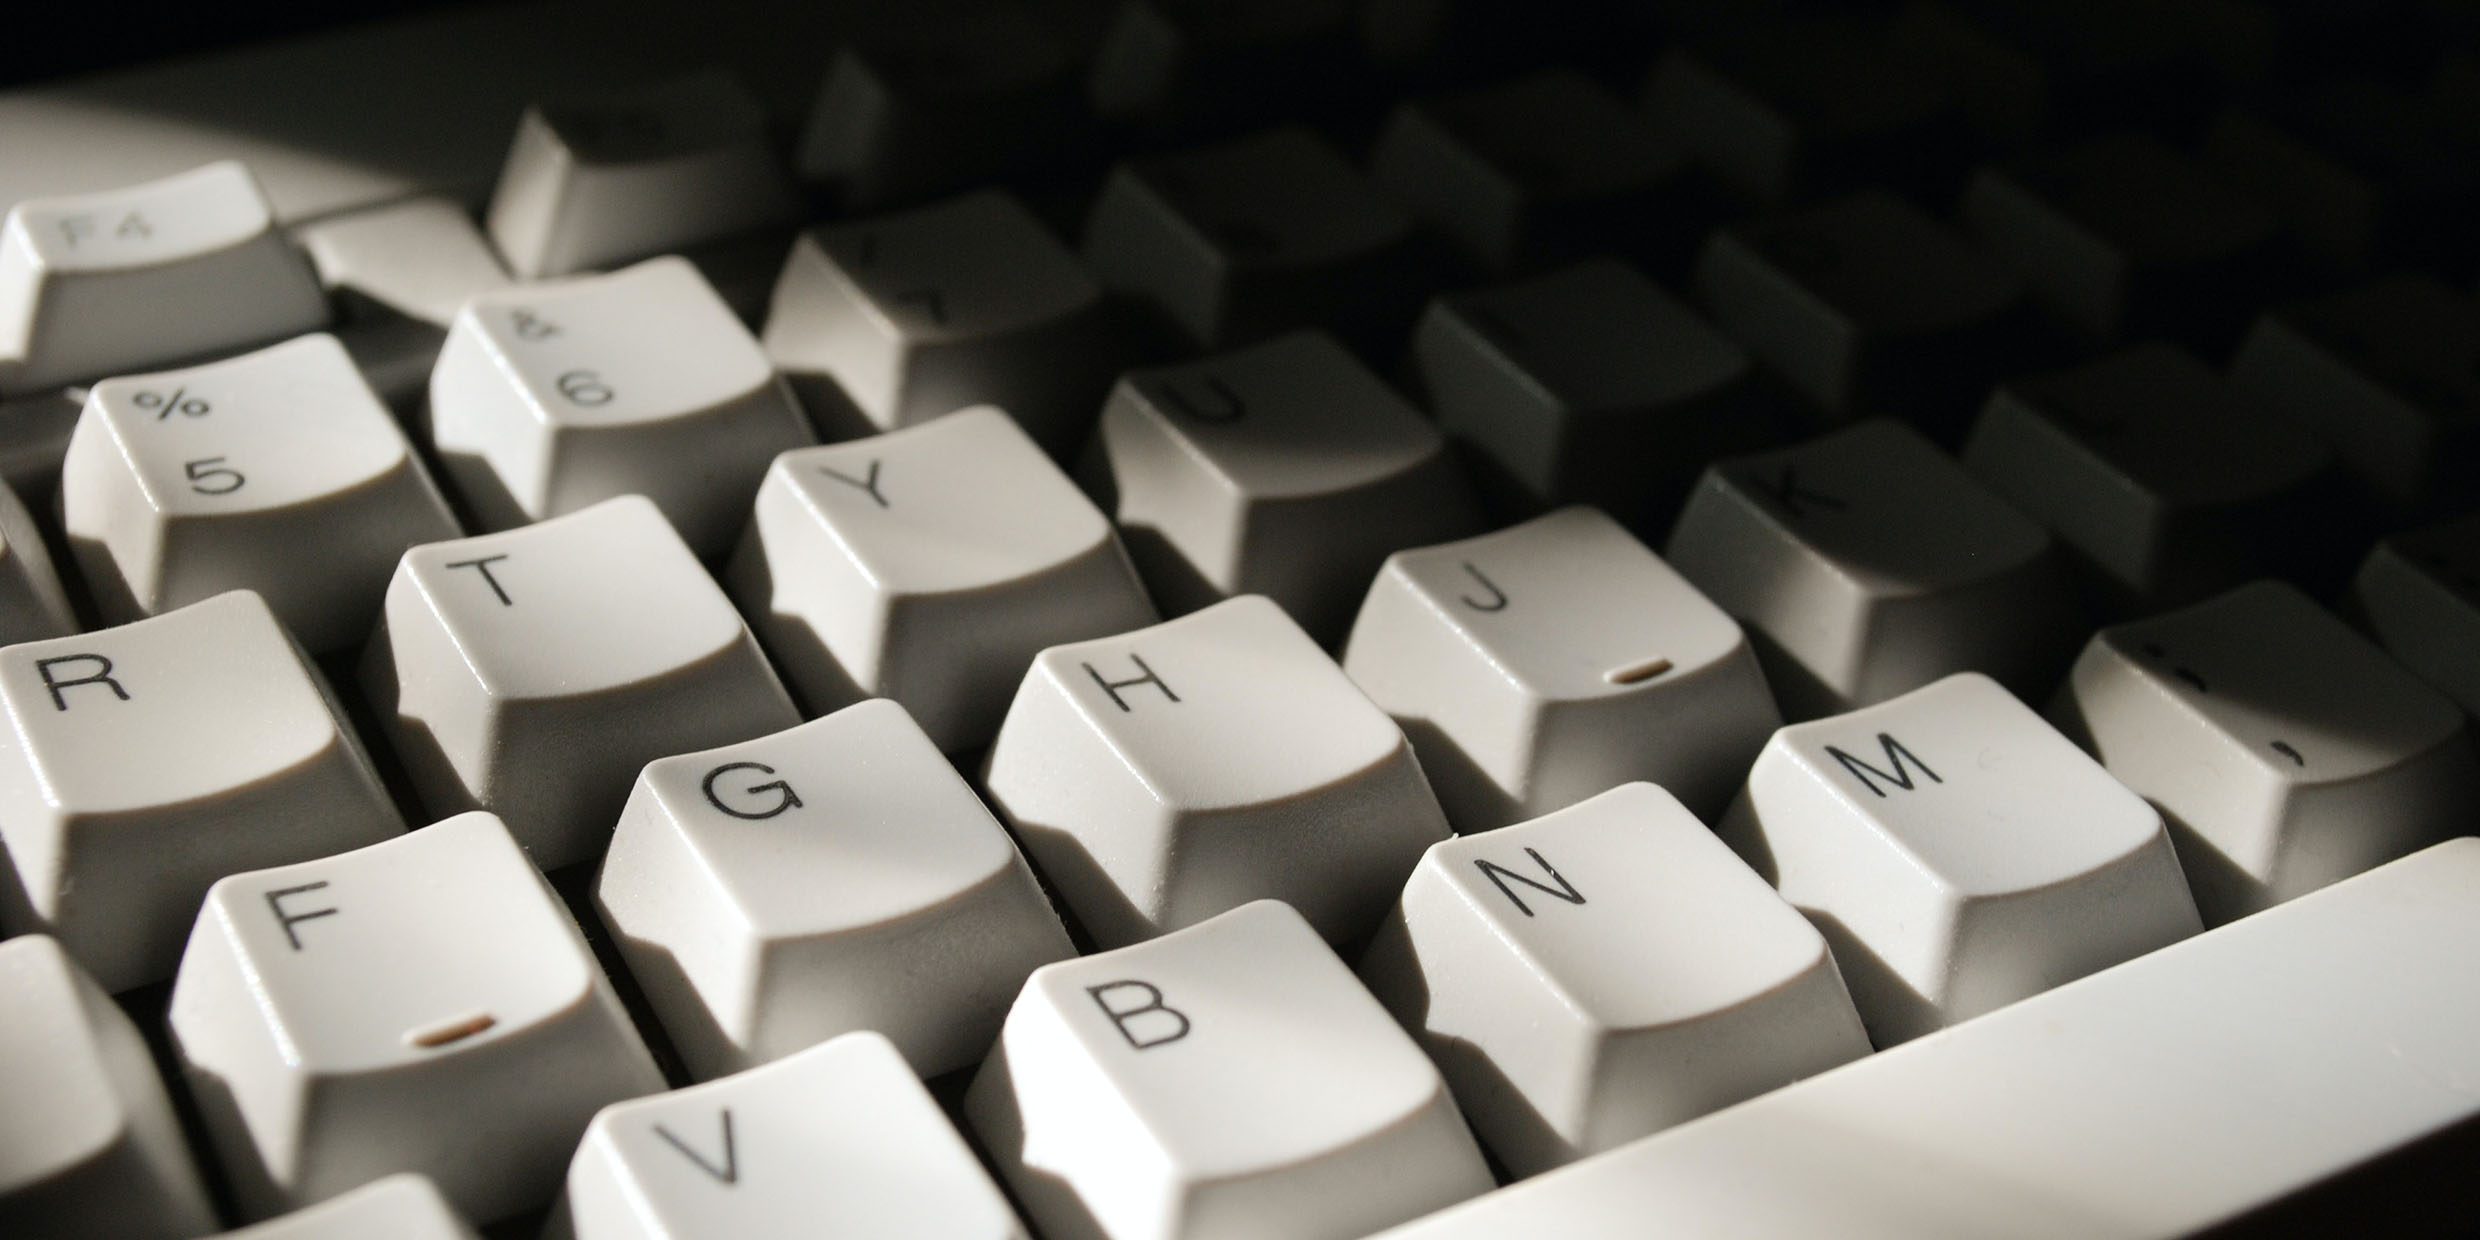 Close up image of a computer keyboard